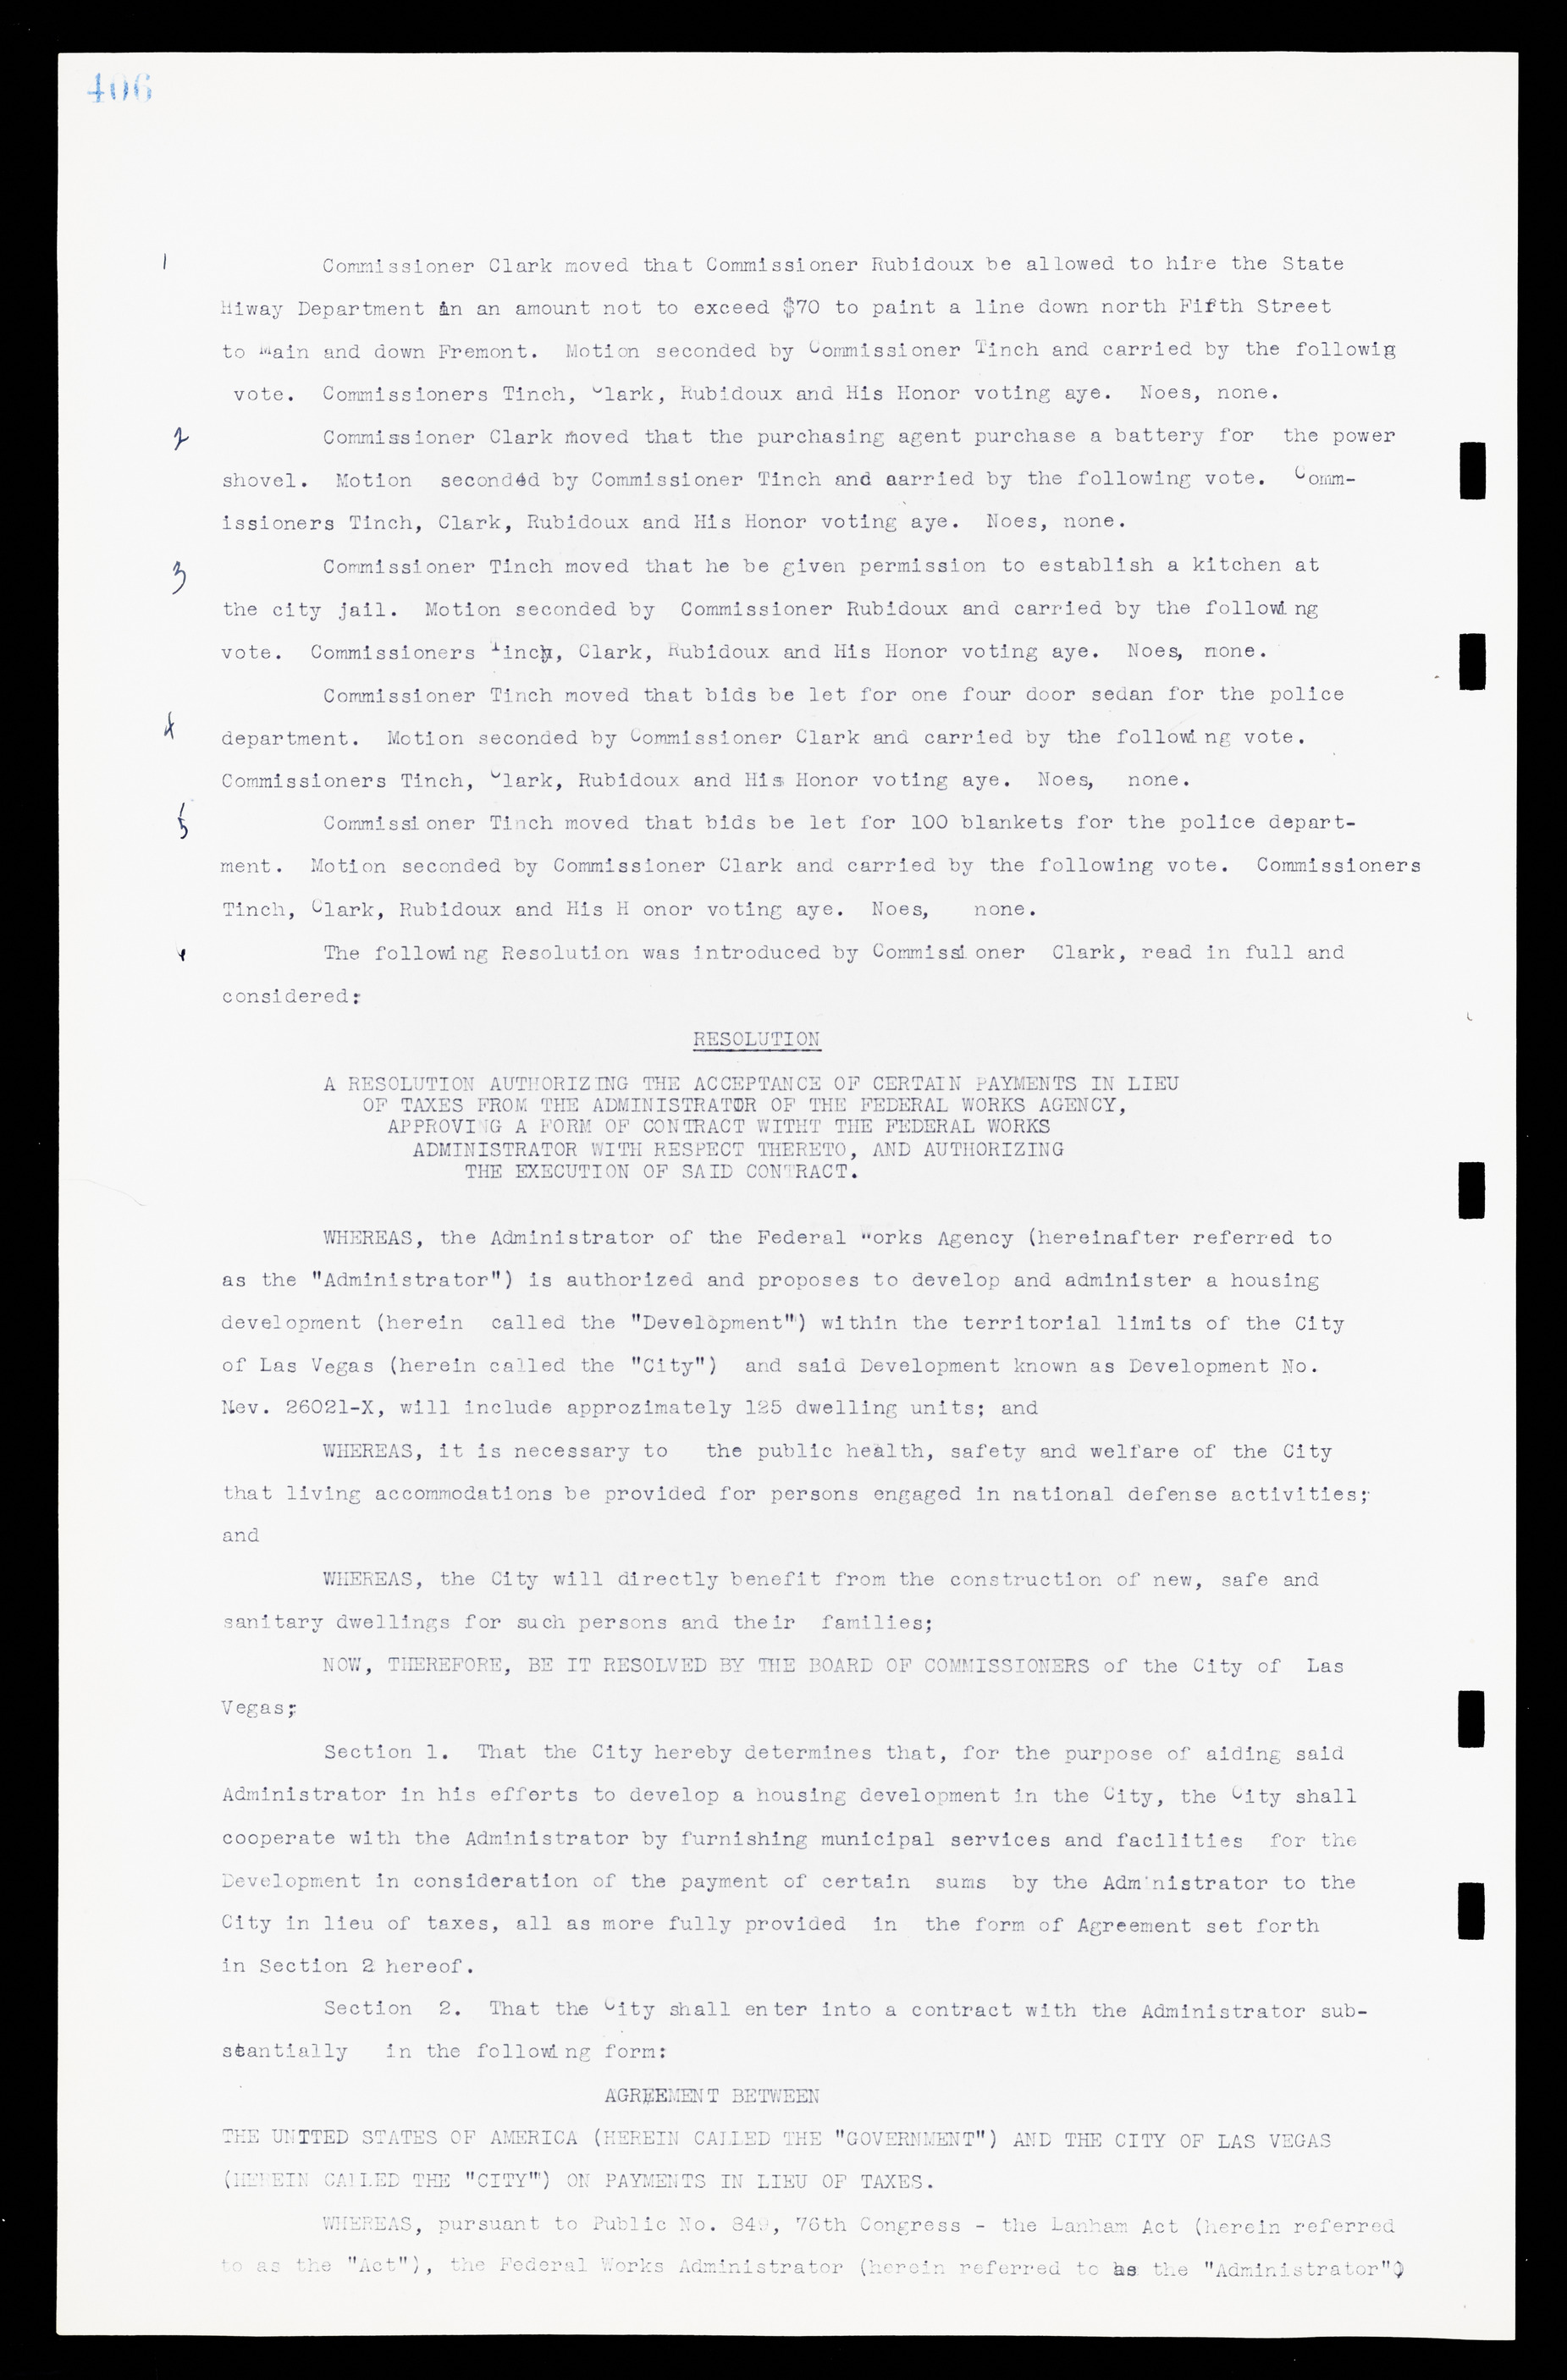 Las Vegas City Commission Minutes, February 17, 1937 to August 4, 1942, lvc000004-432